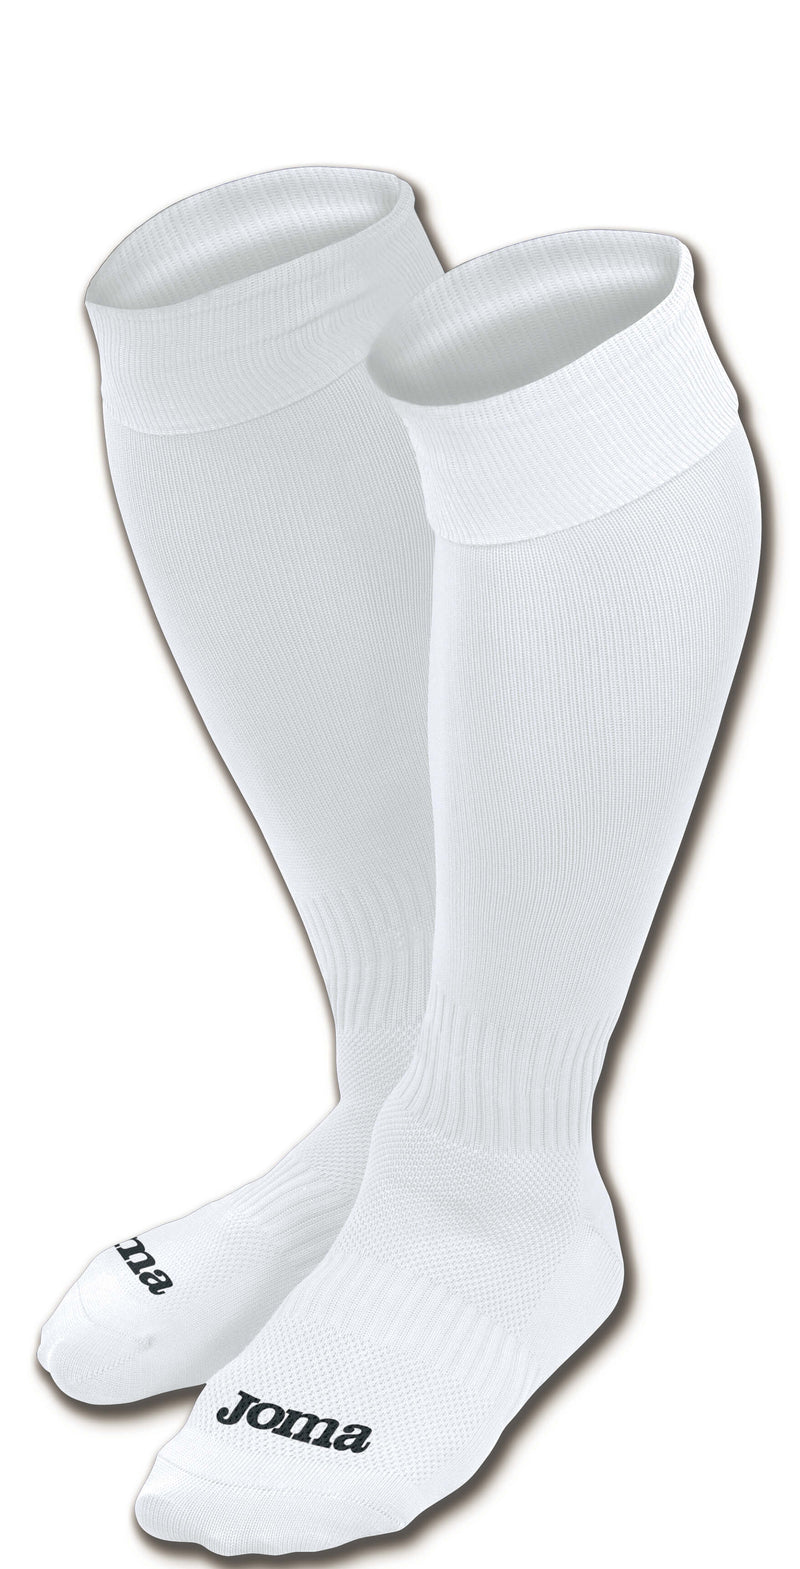 Joma Classic III Soccer Socks (20 pack)-Soccer Command